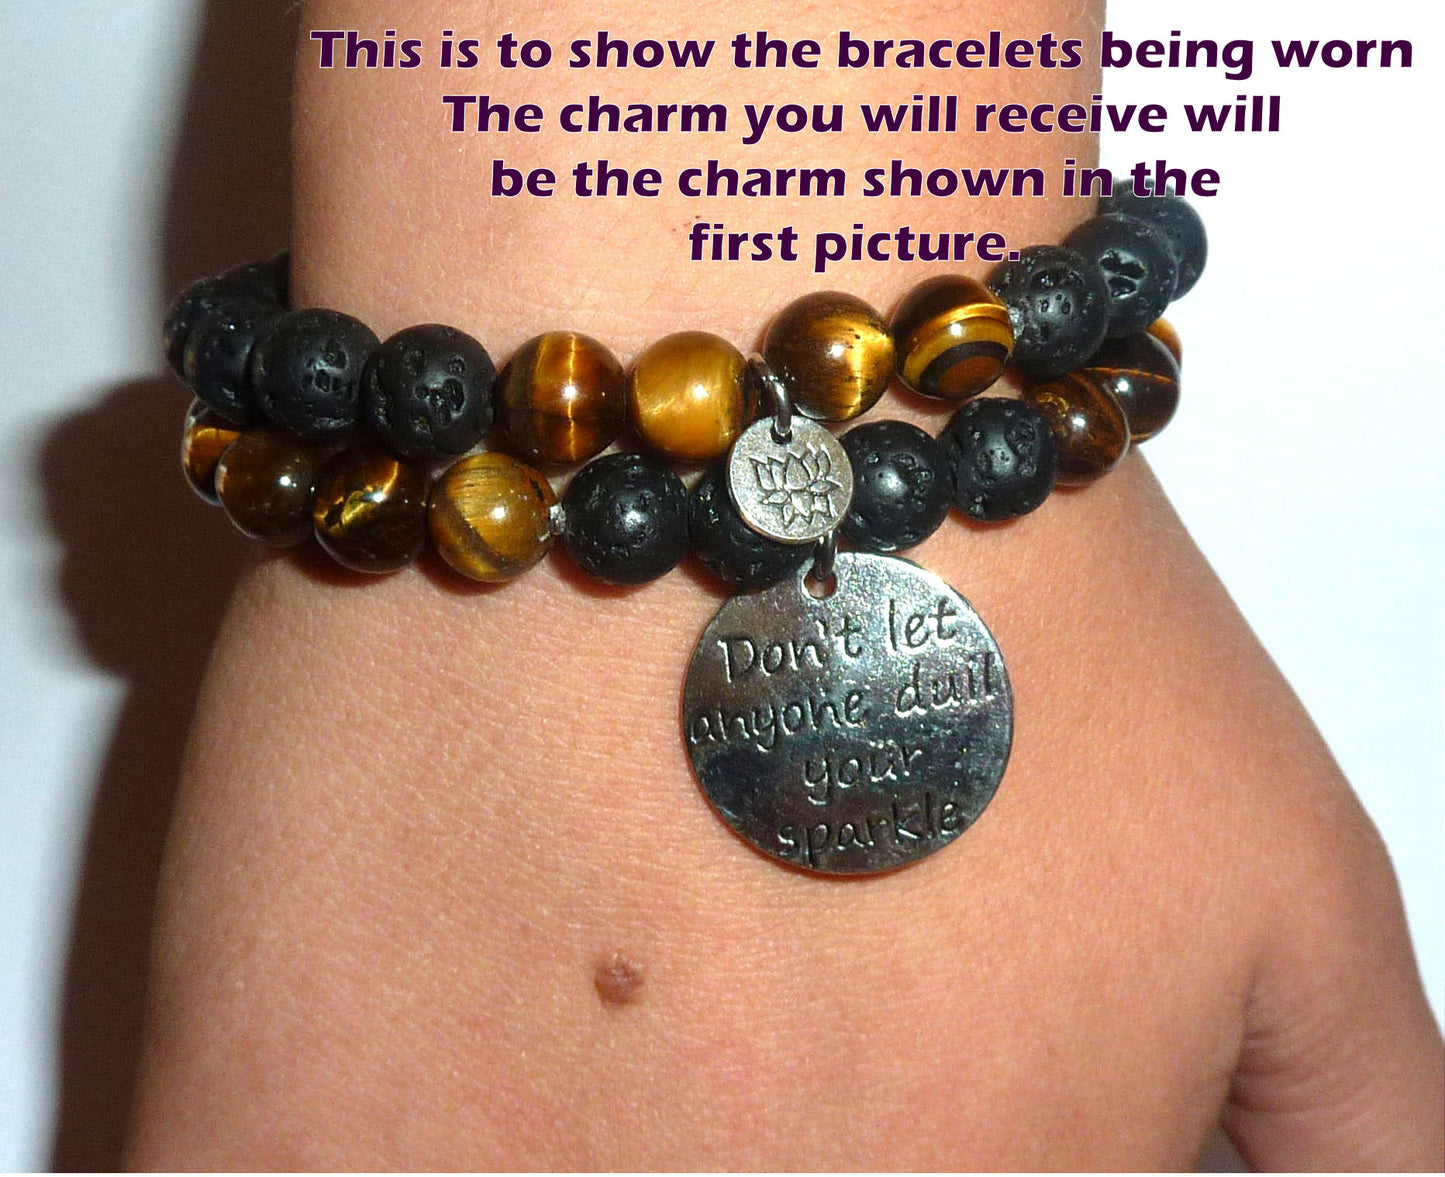 Unicorn Charm - Women's Tiger Eye & Black Lava Diffuser Yoga Beads Charm Stretch Bracelet Gift Set